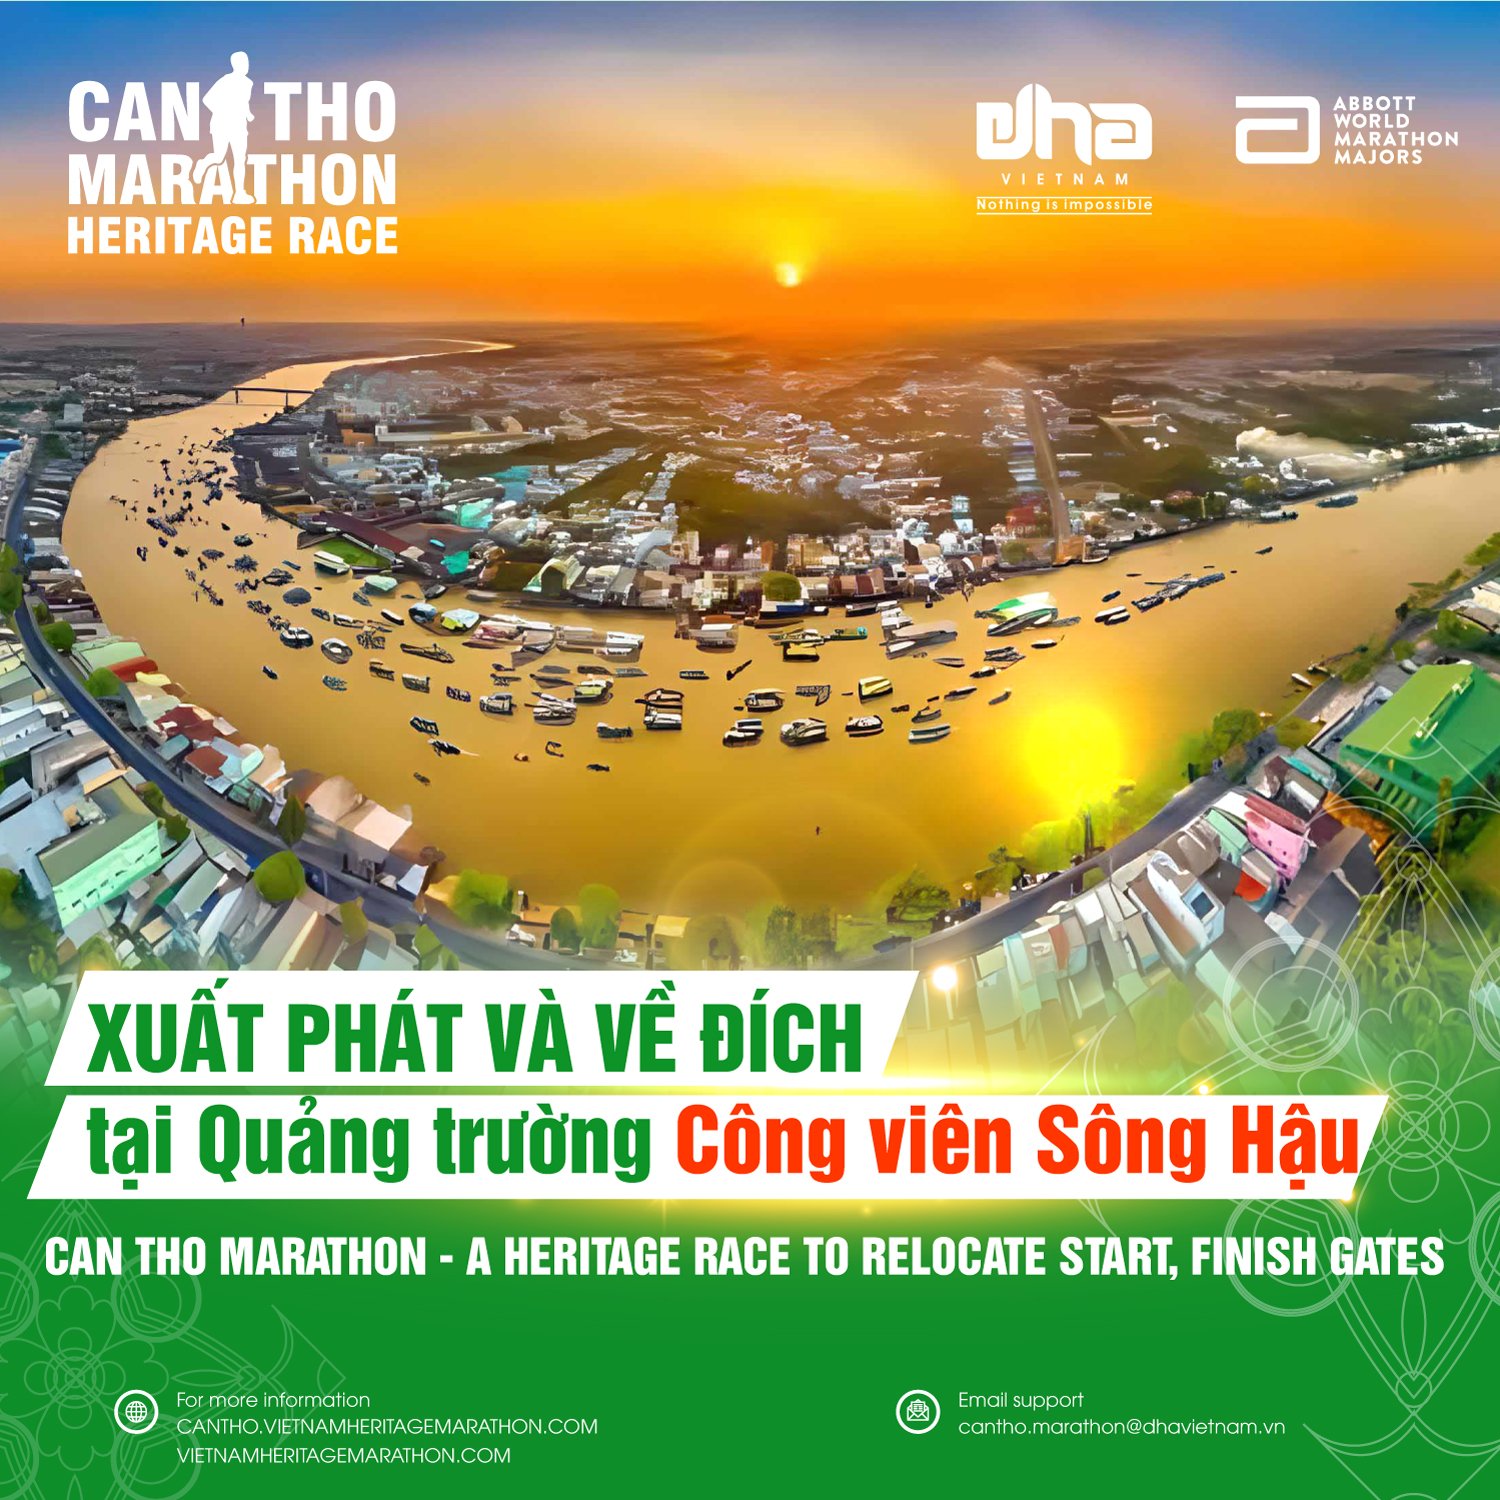 Can Tho Marathon - A Heritage Race Relocates Start, Finish Gates